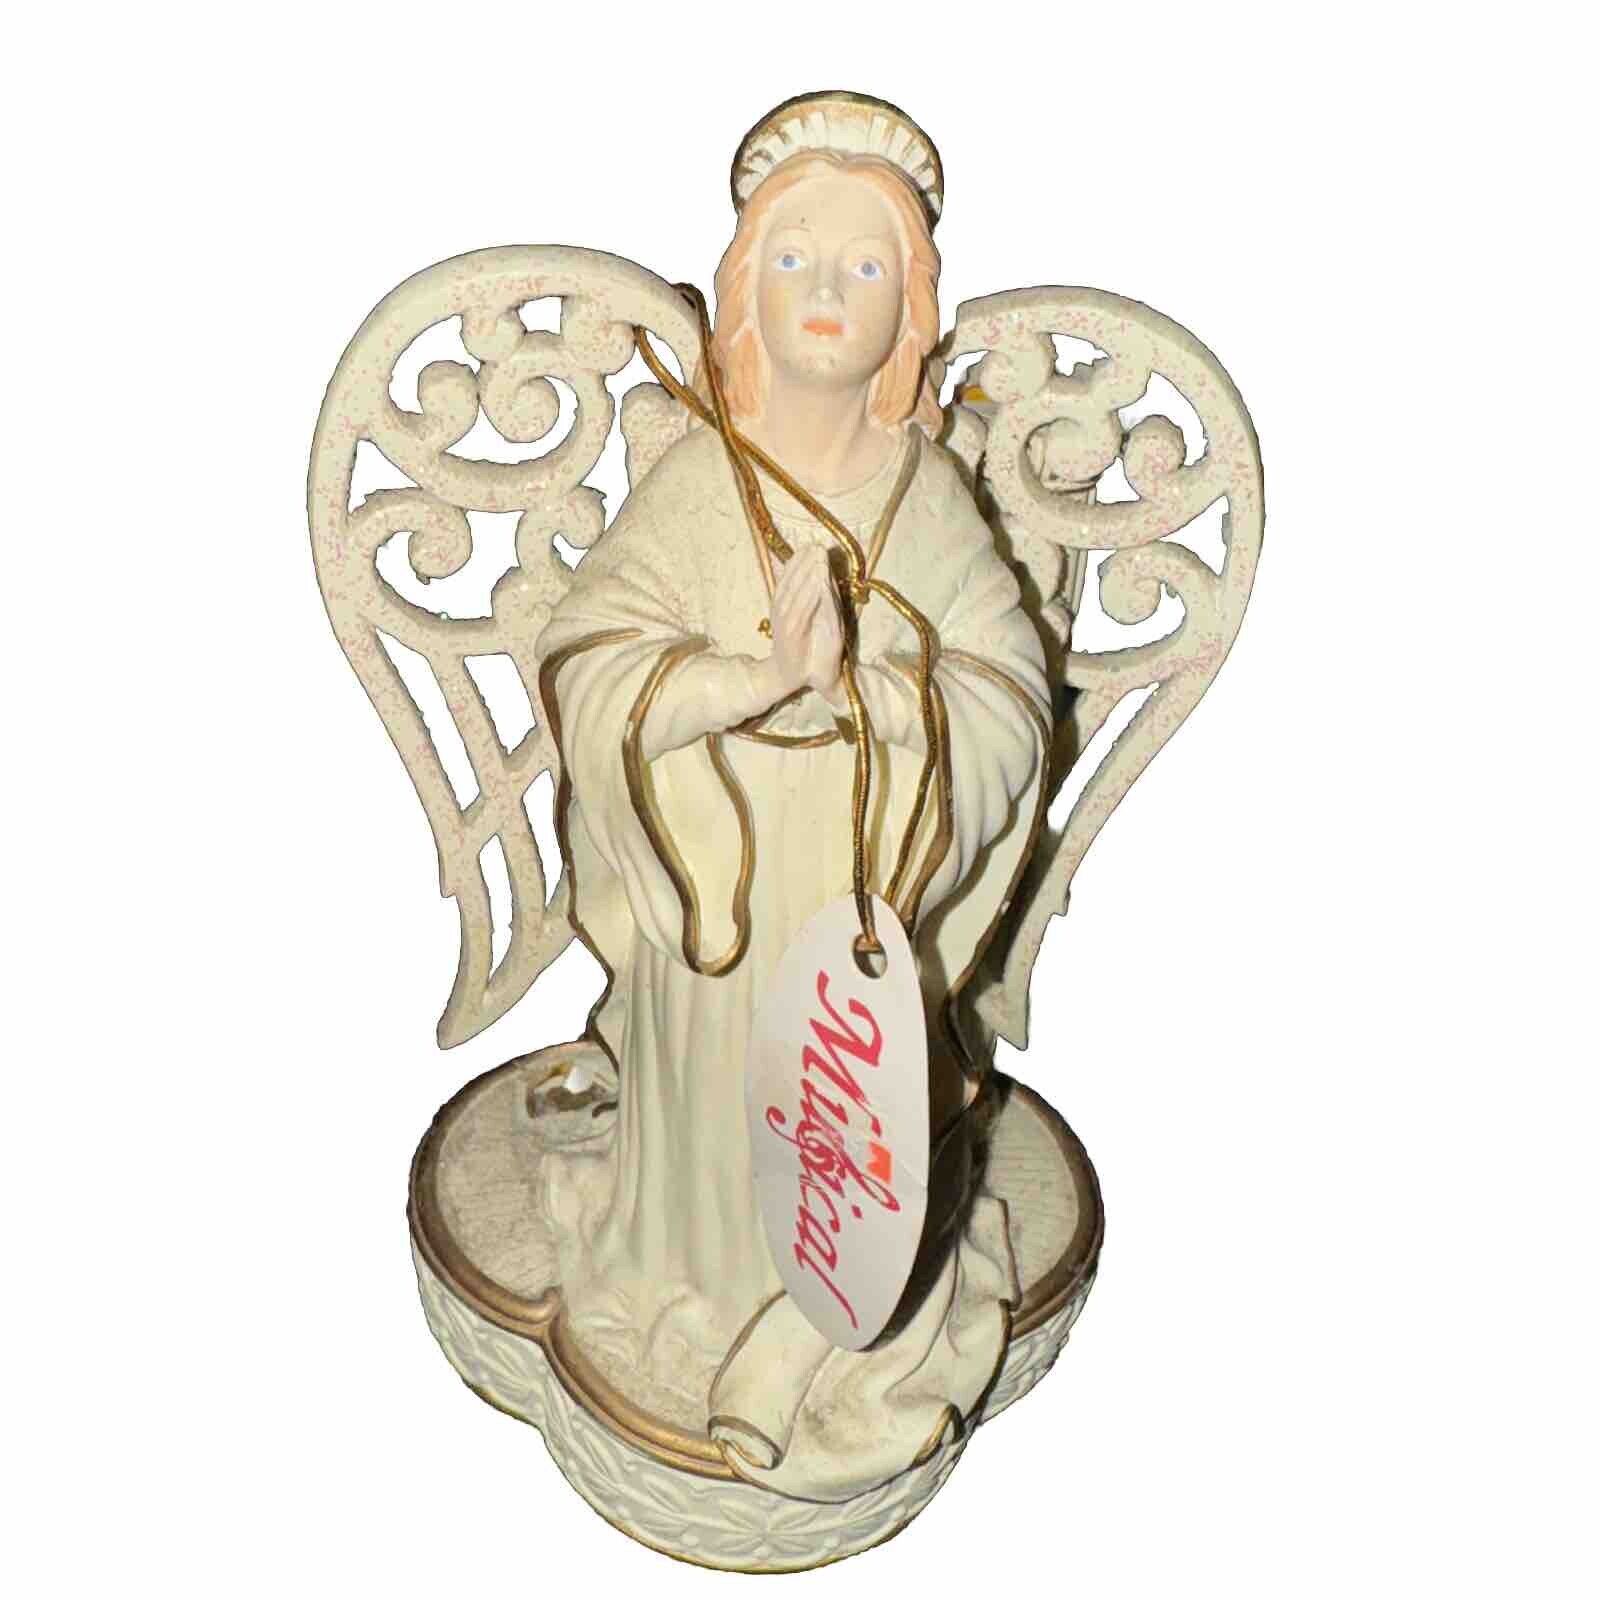 Berkeley Designs Musical Angel Resin Figure Plays “Silent Night”